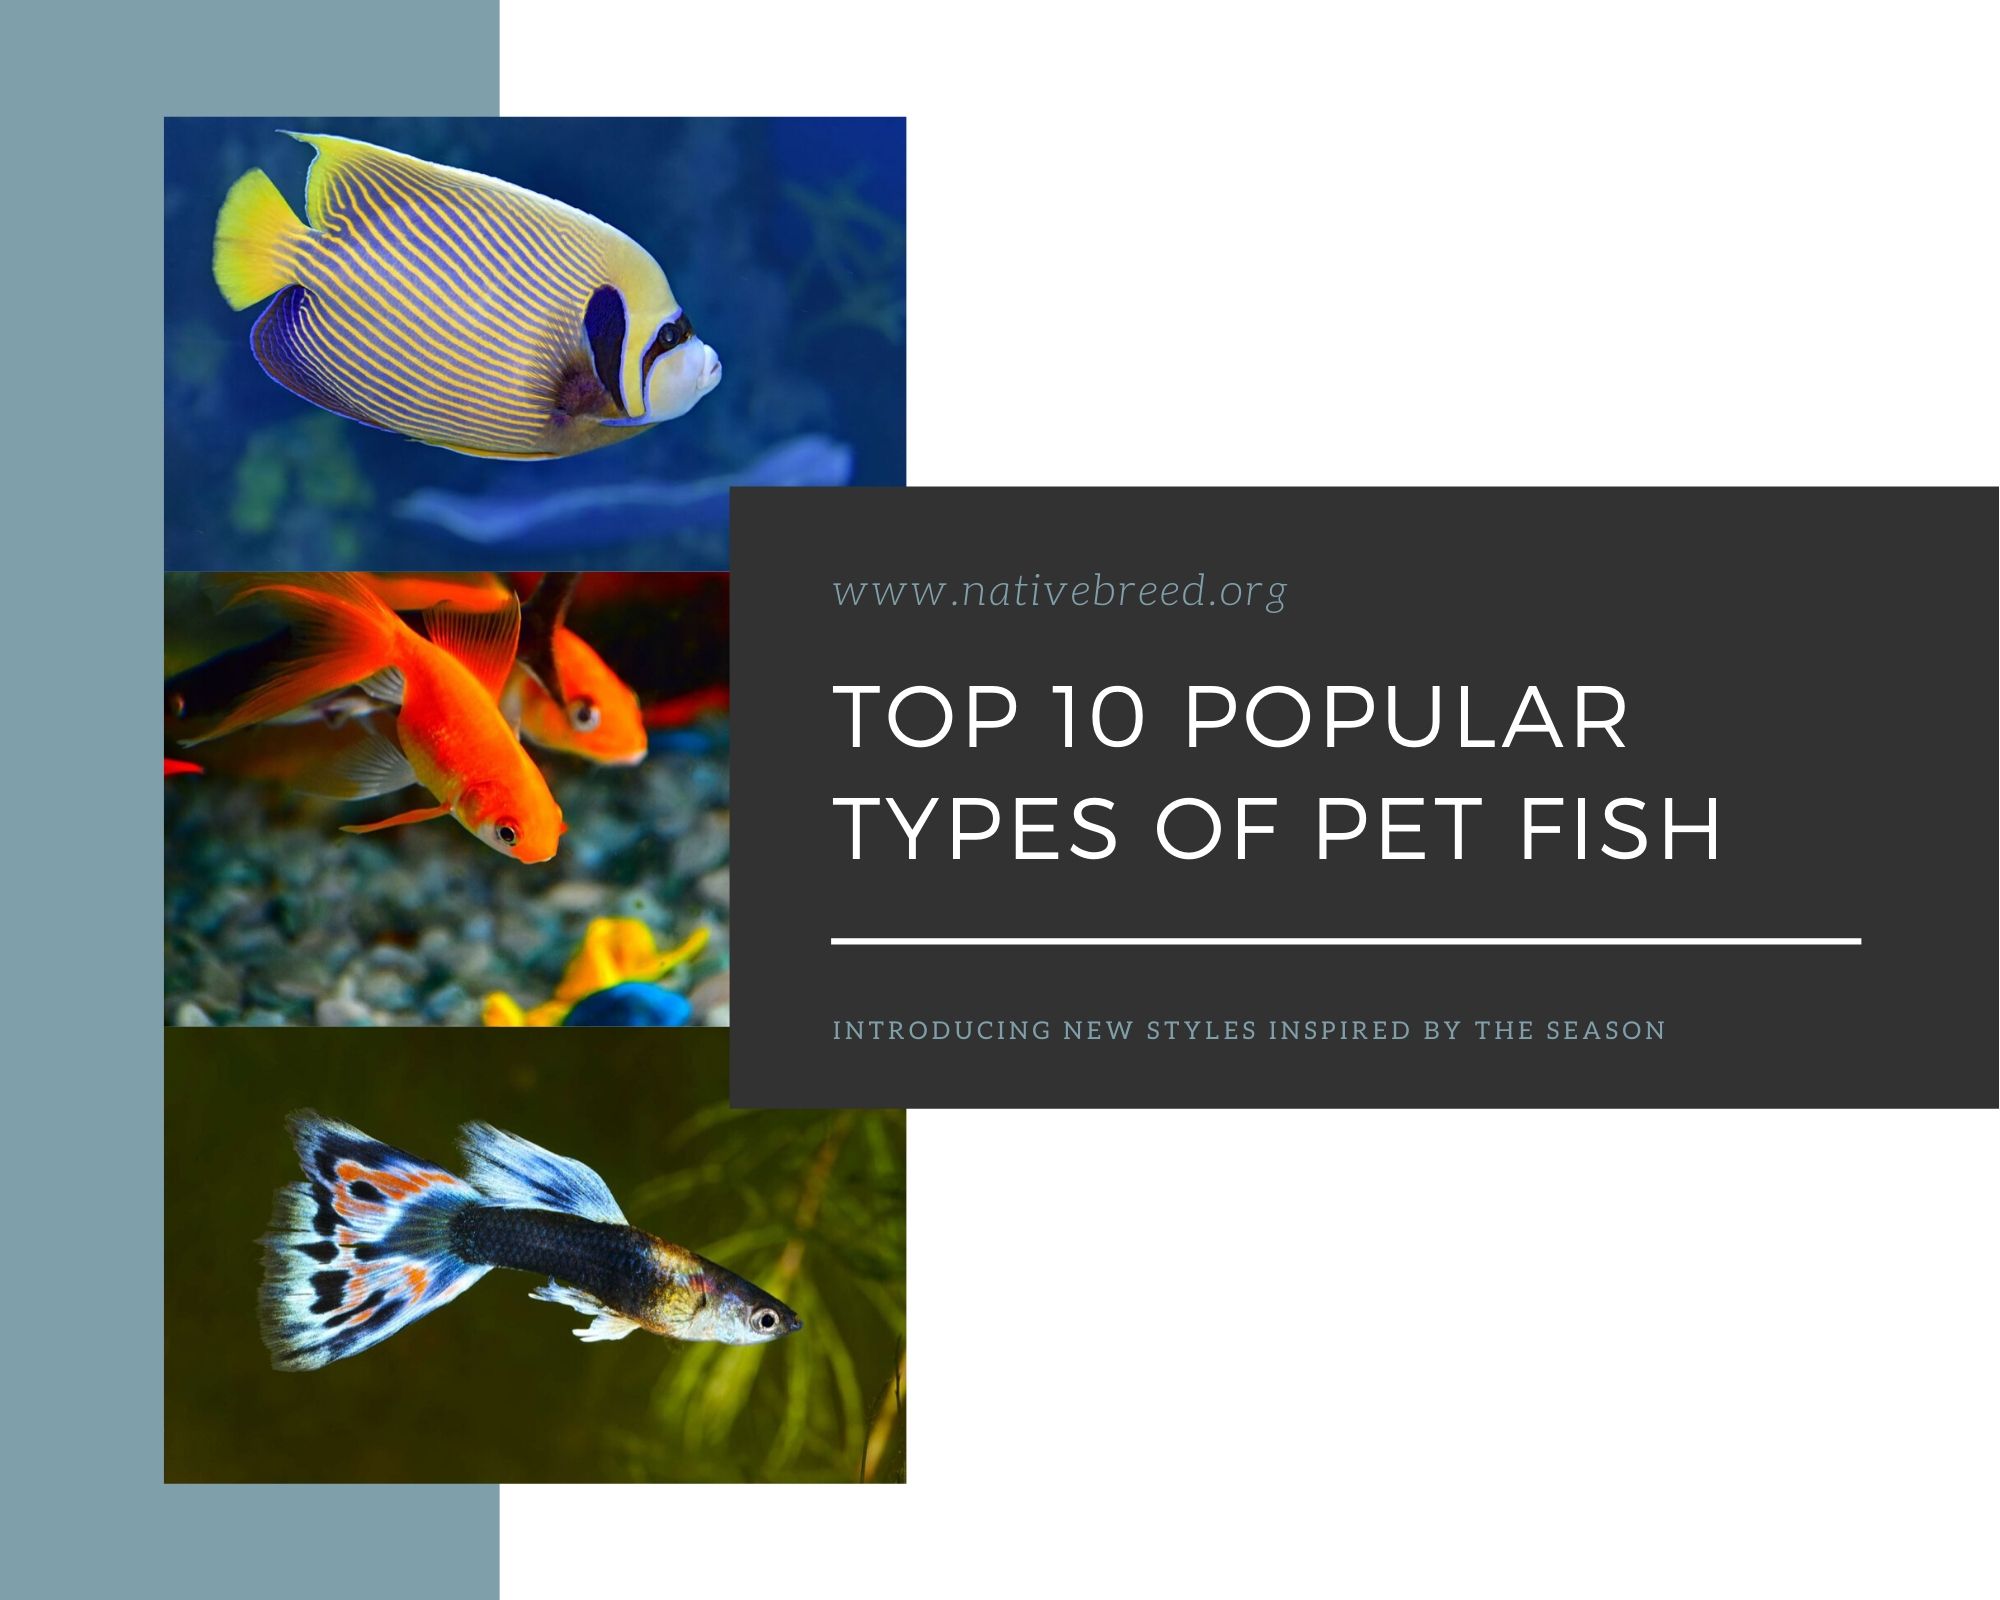 10 Popular Types of Pet Fish